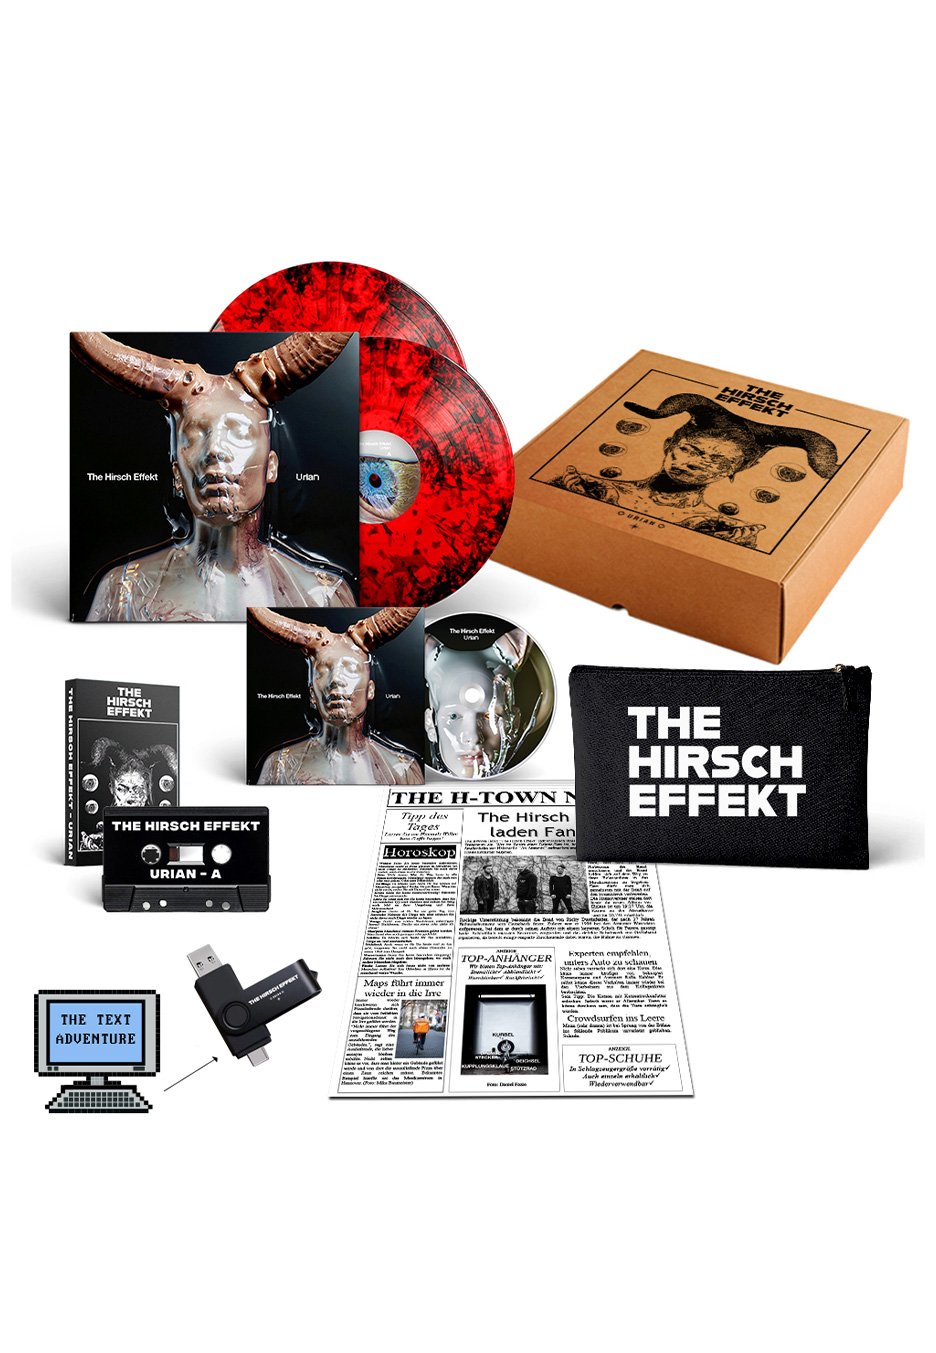 The Hirsch Effekt - Urian Ltd. Transparent Red/Black Dust - Colored 2 Vinyl + CD + MC Fanbox